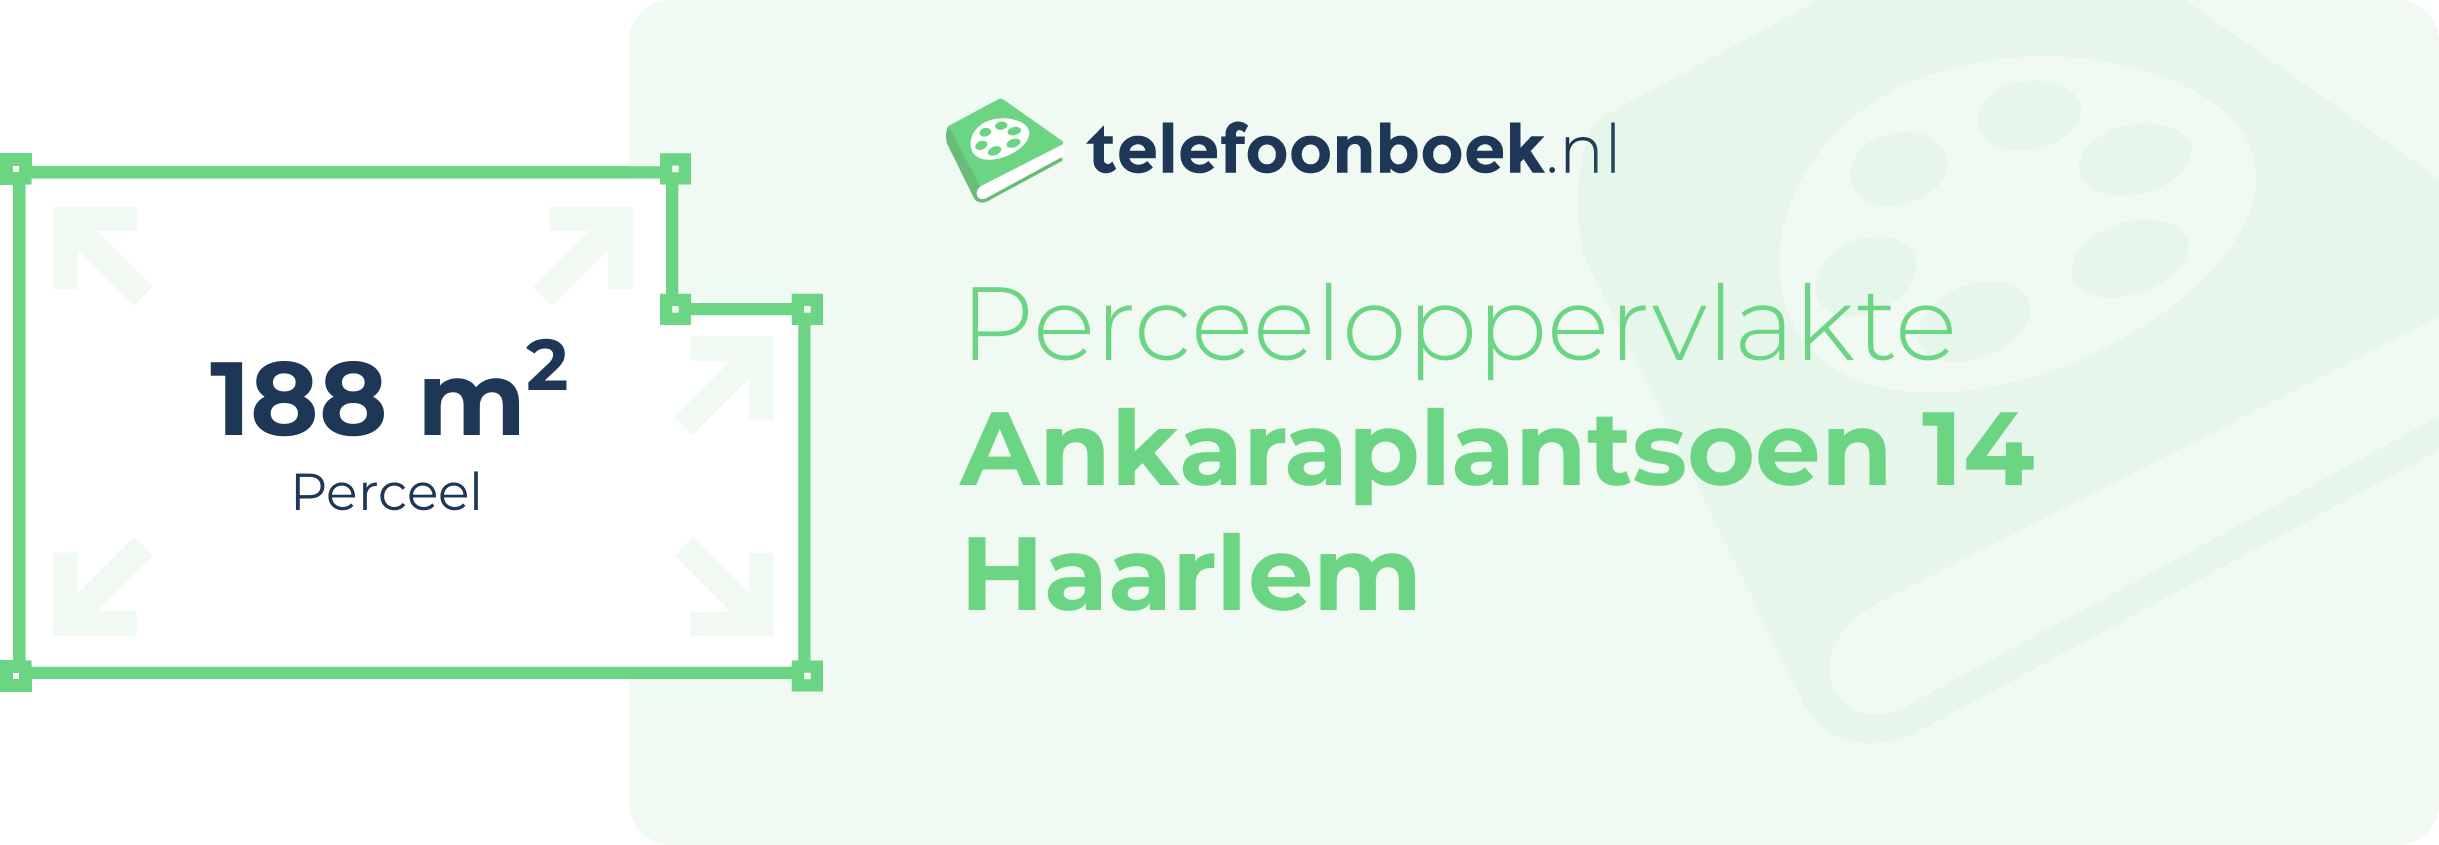 Perceeloppervlakte Ankaraplantsoen 14 Haarlem